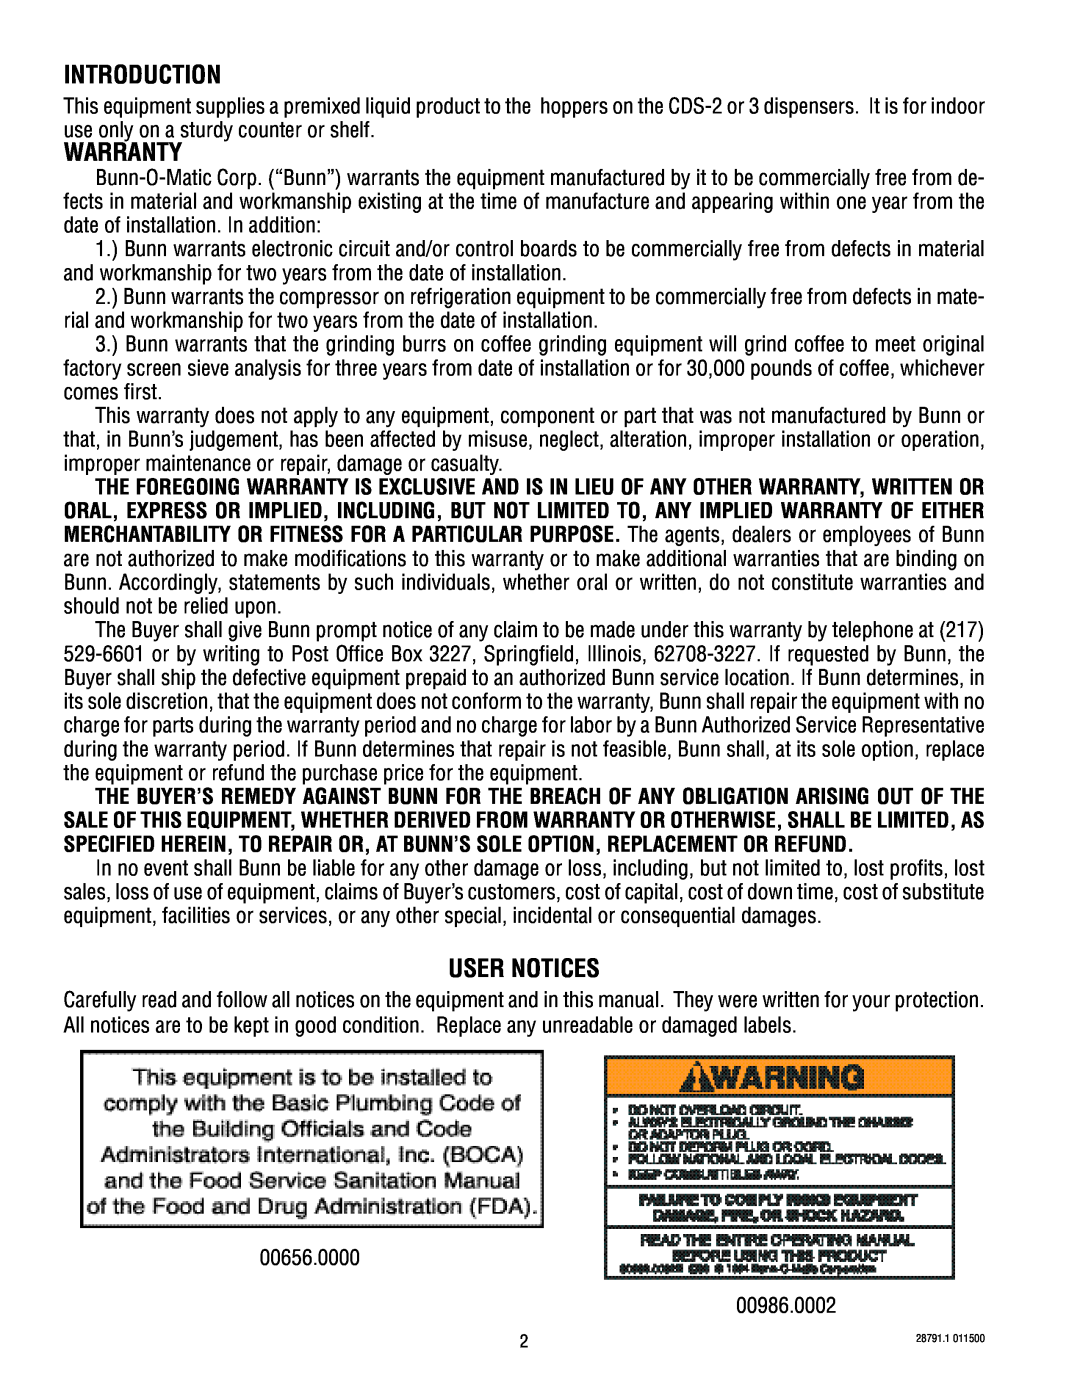 Bunn AF PR-3 service manual Introduction, Warranty, User Notices 